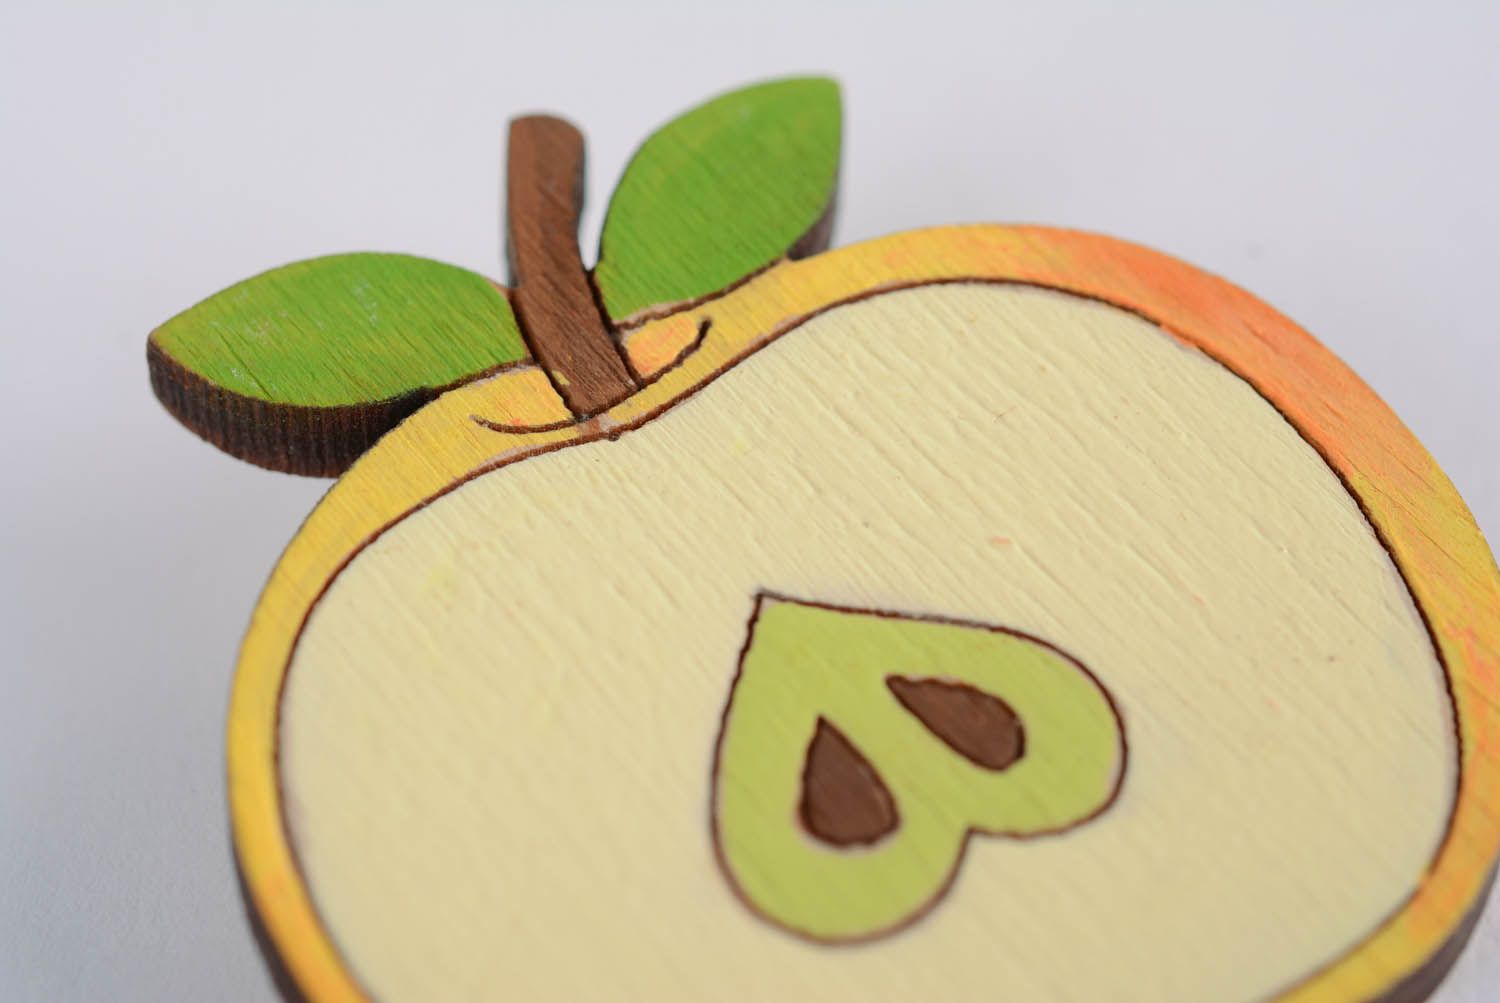 Broche de madera pintado “Manzana” foto 5